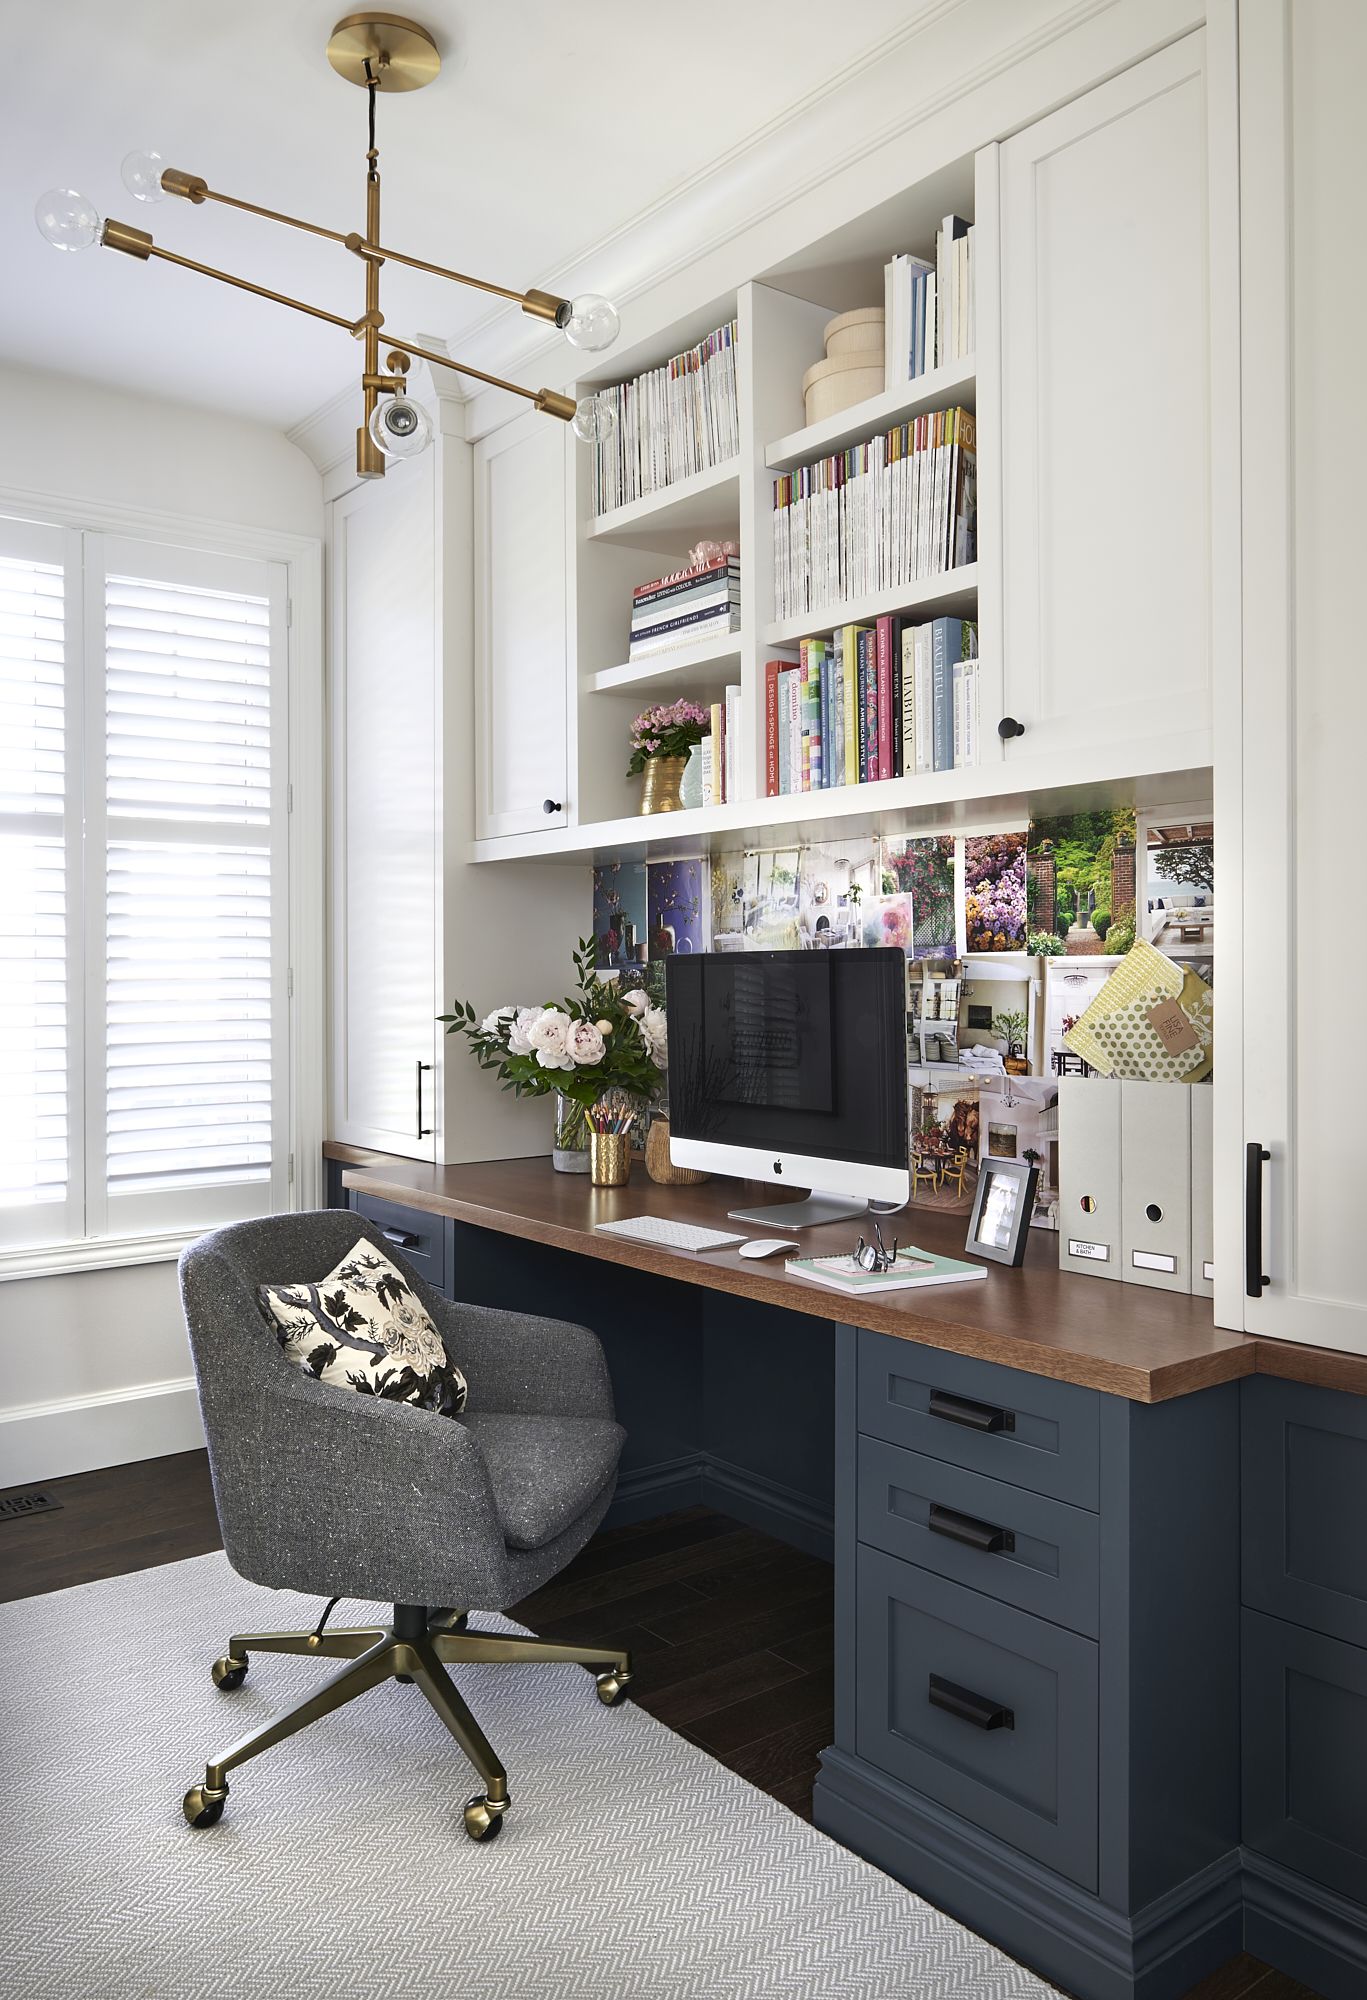 10 Minimalist Home Office Design Ideas For An Inspiring Workspace